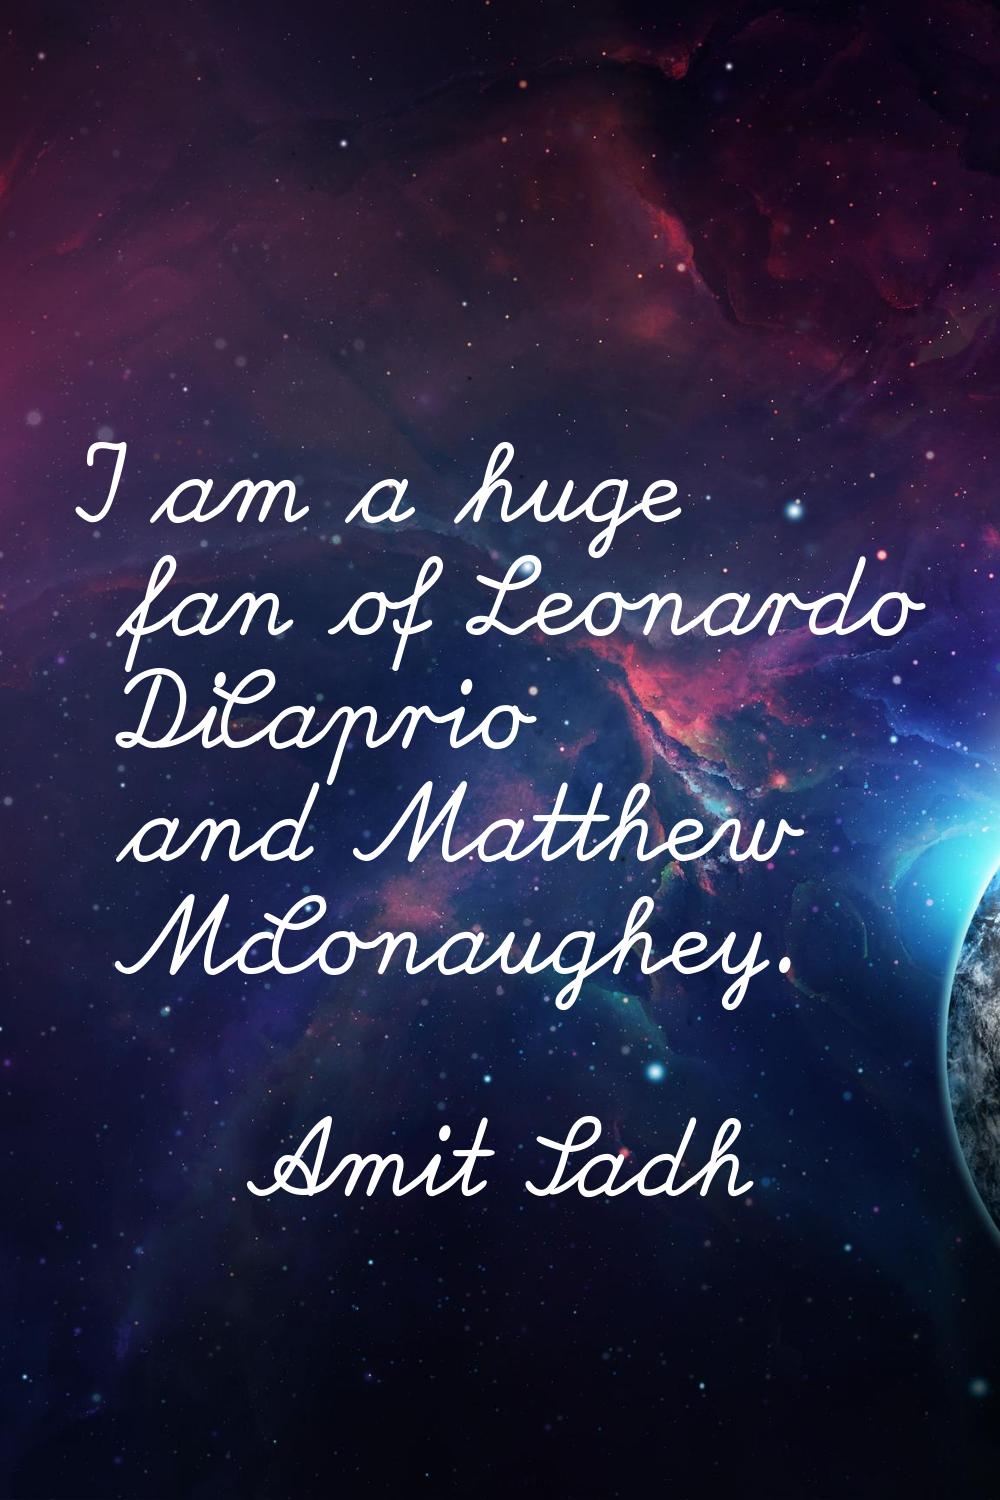 I am a huge fan of Leonardo DiCaprio and Matthew McConaughey.